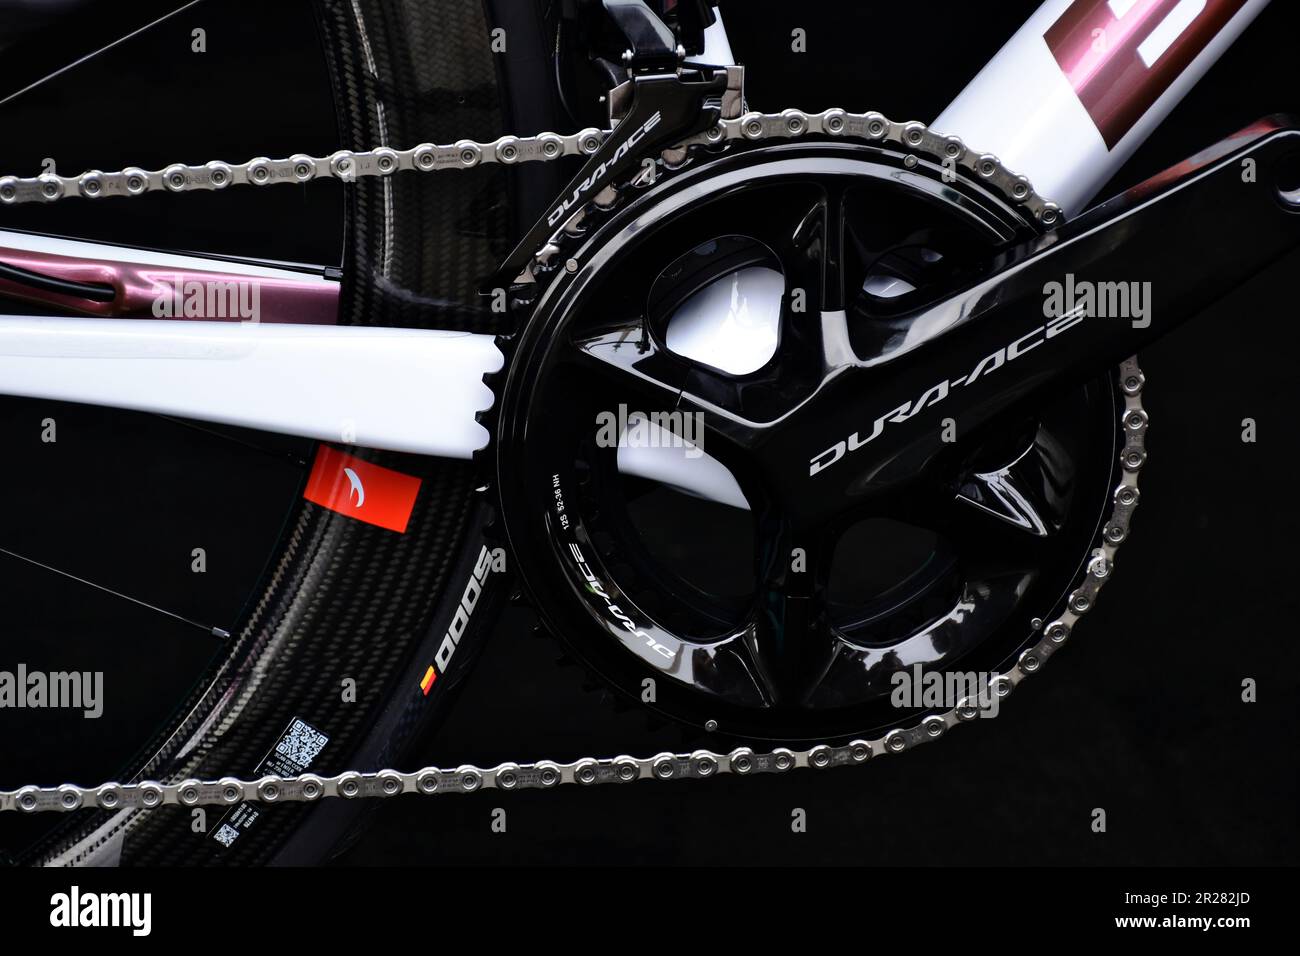 Shimano Dura-Ace front gear and drive crank race bike closeup. gearwheel, frame, composite wheel, rubber tire and spokes. high tech mechanical design Stock Photo